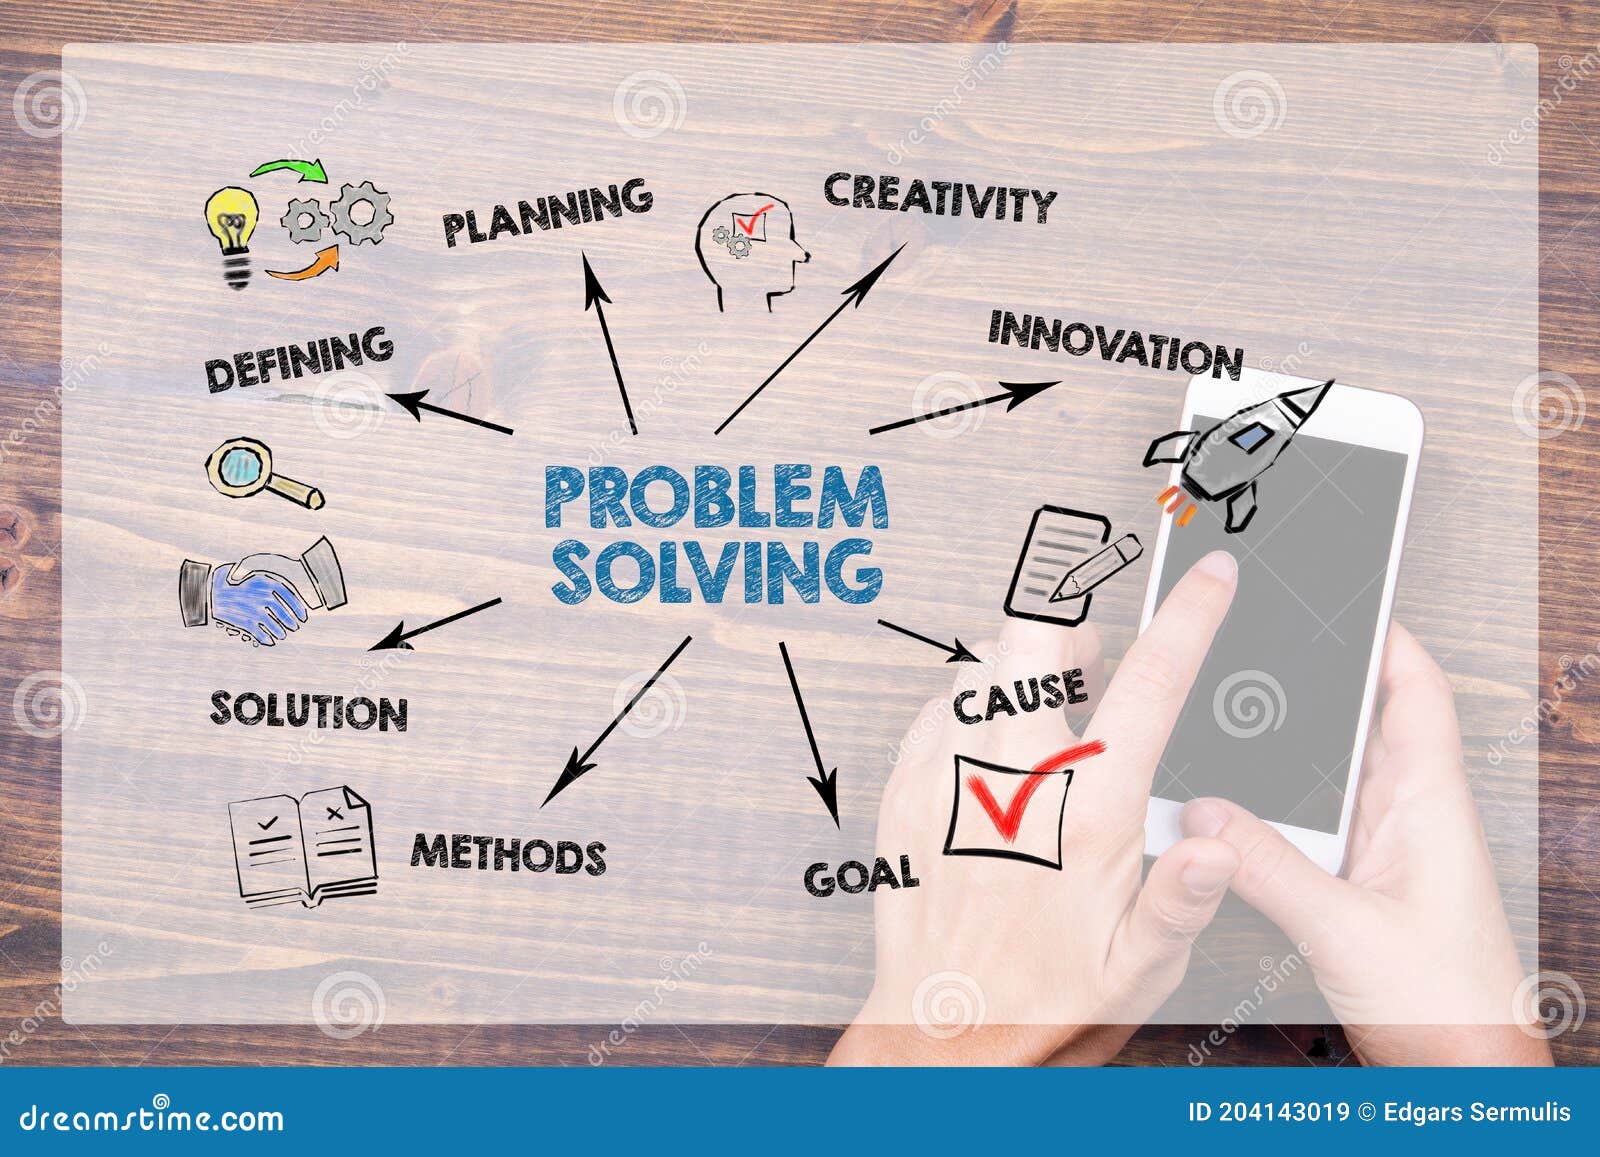 innovation in problem solving